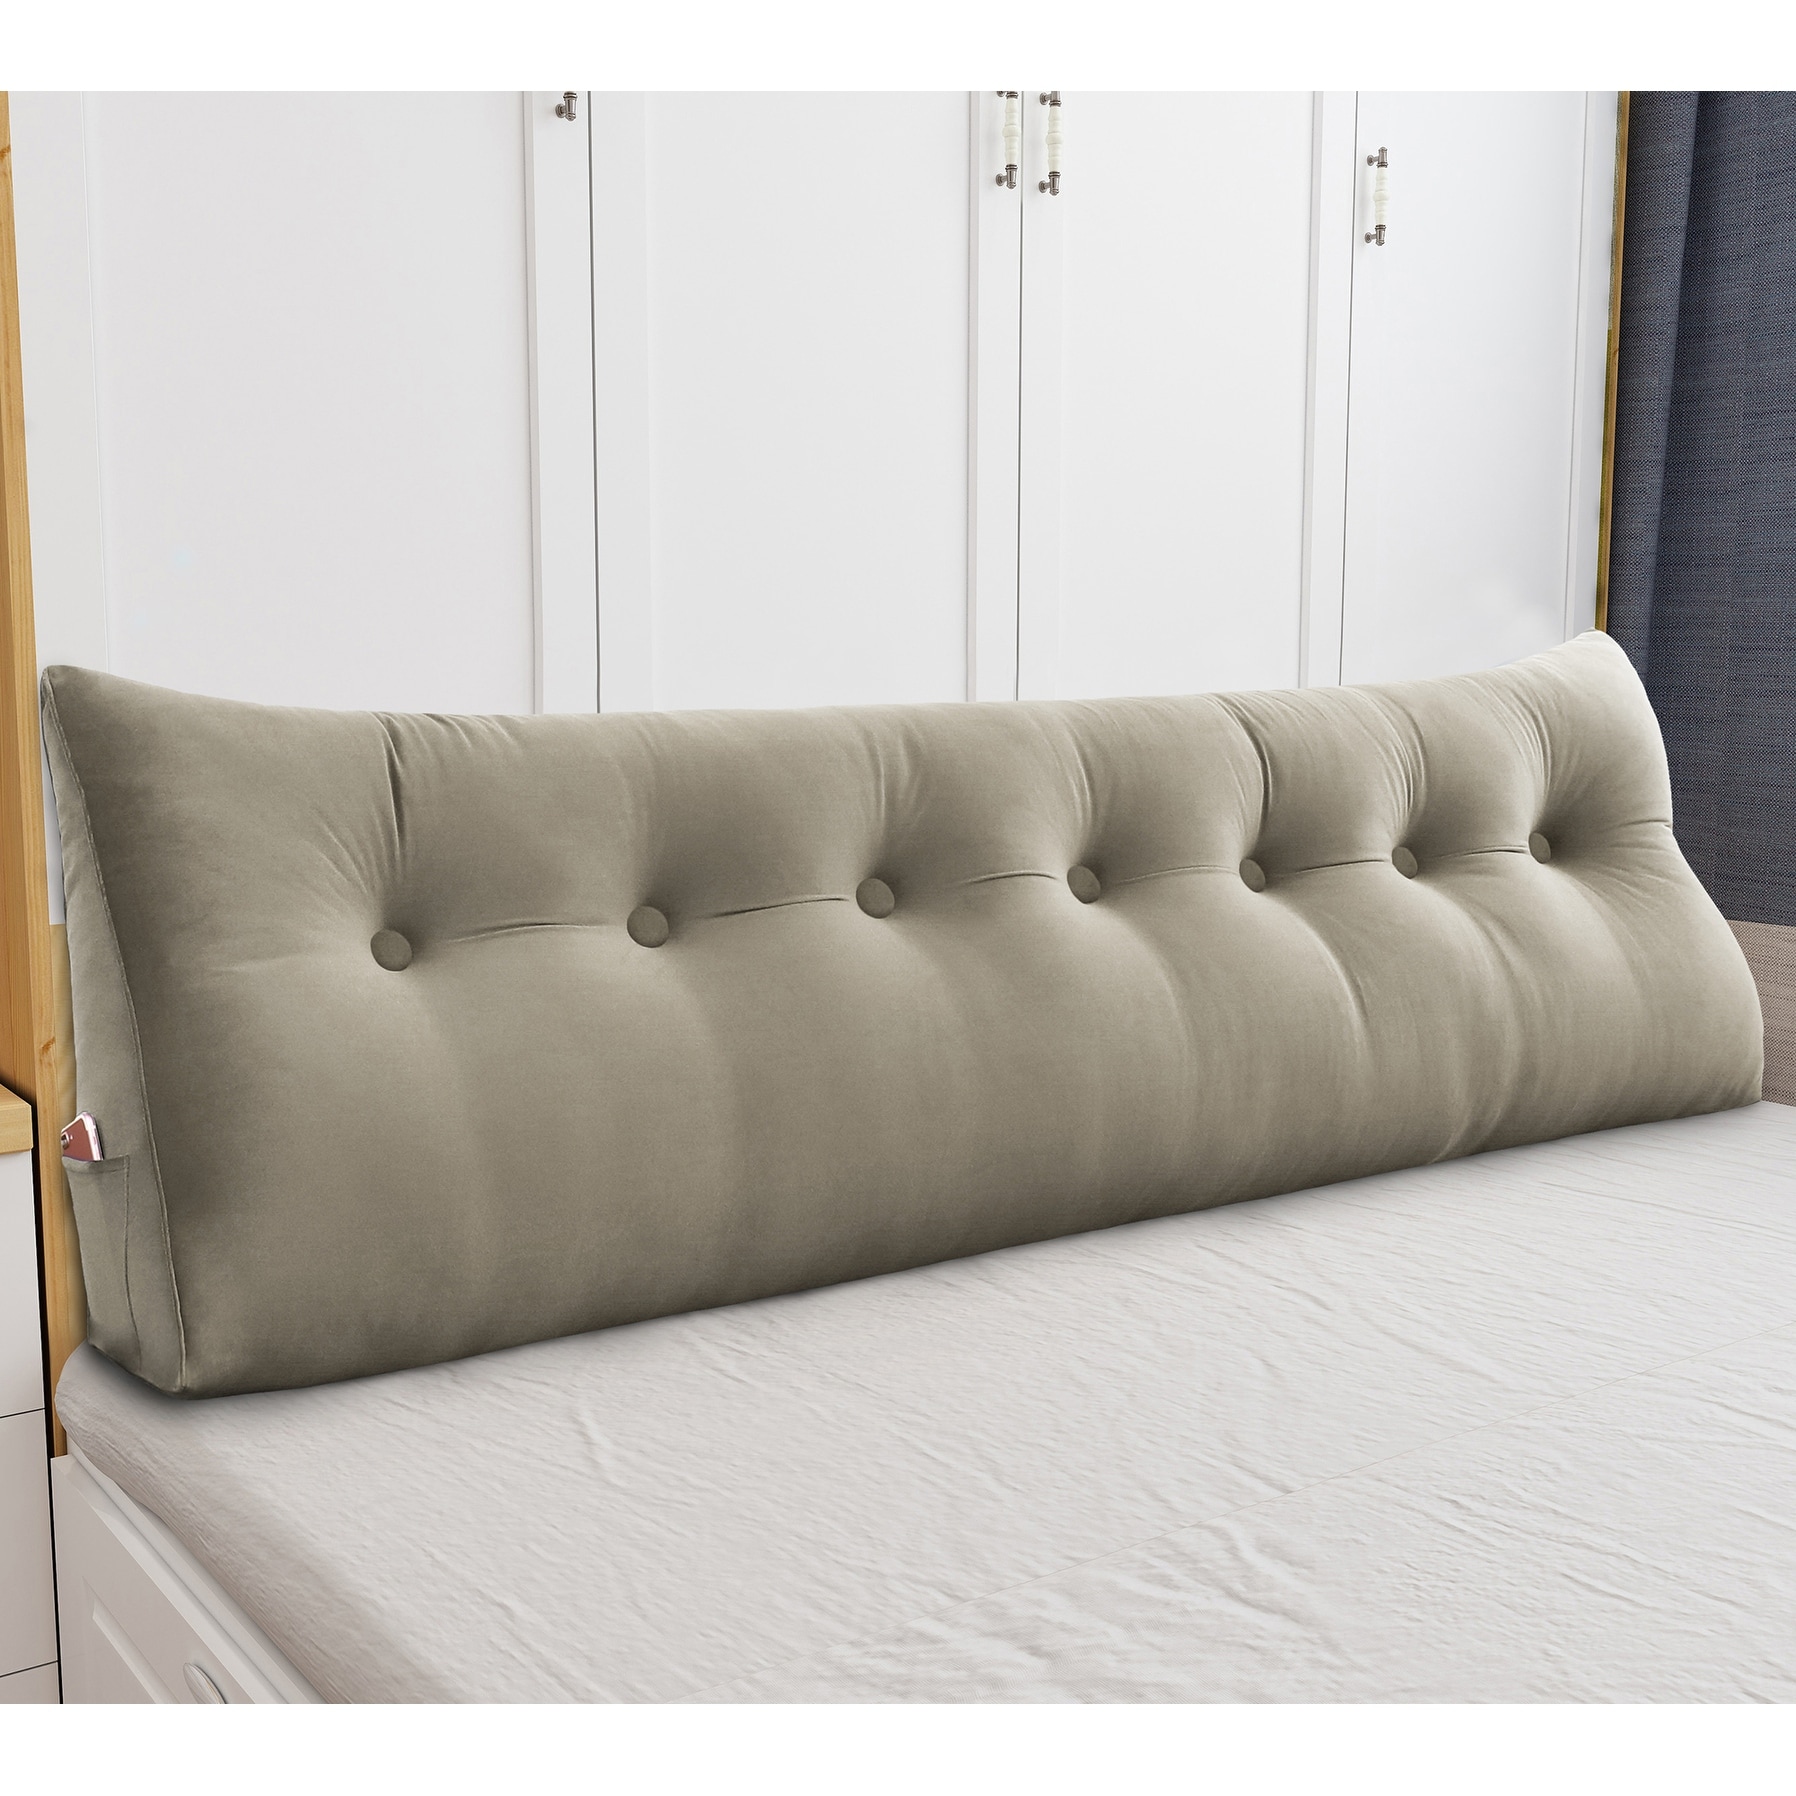 Soft Bed Rest Reading Pillow Big Wedge Backrest Lounge Sofa